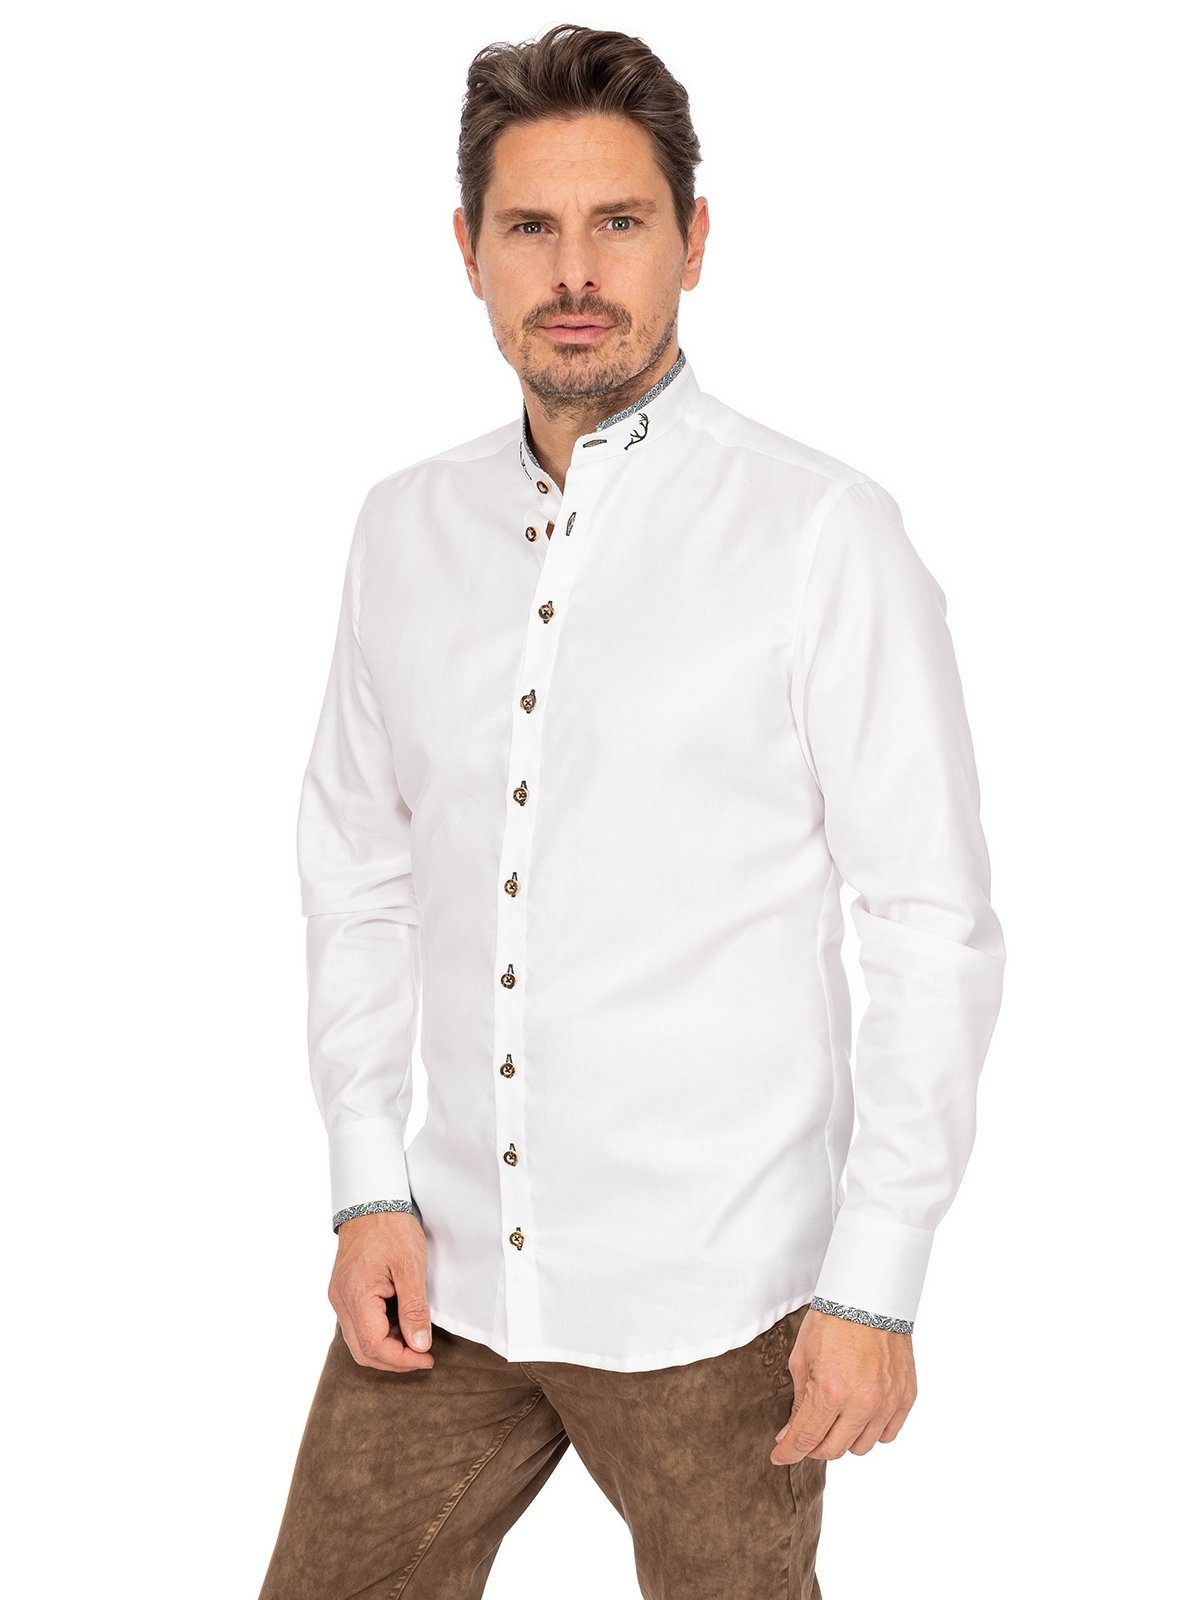 Gipfelstürmer Trachtenhemd oliv weiß Stehkragen Hemd 420000-4246-155 Fi (Slim